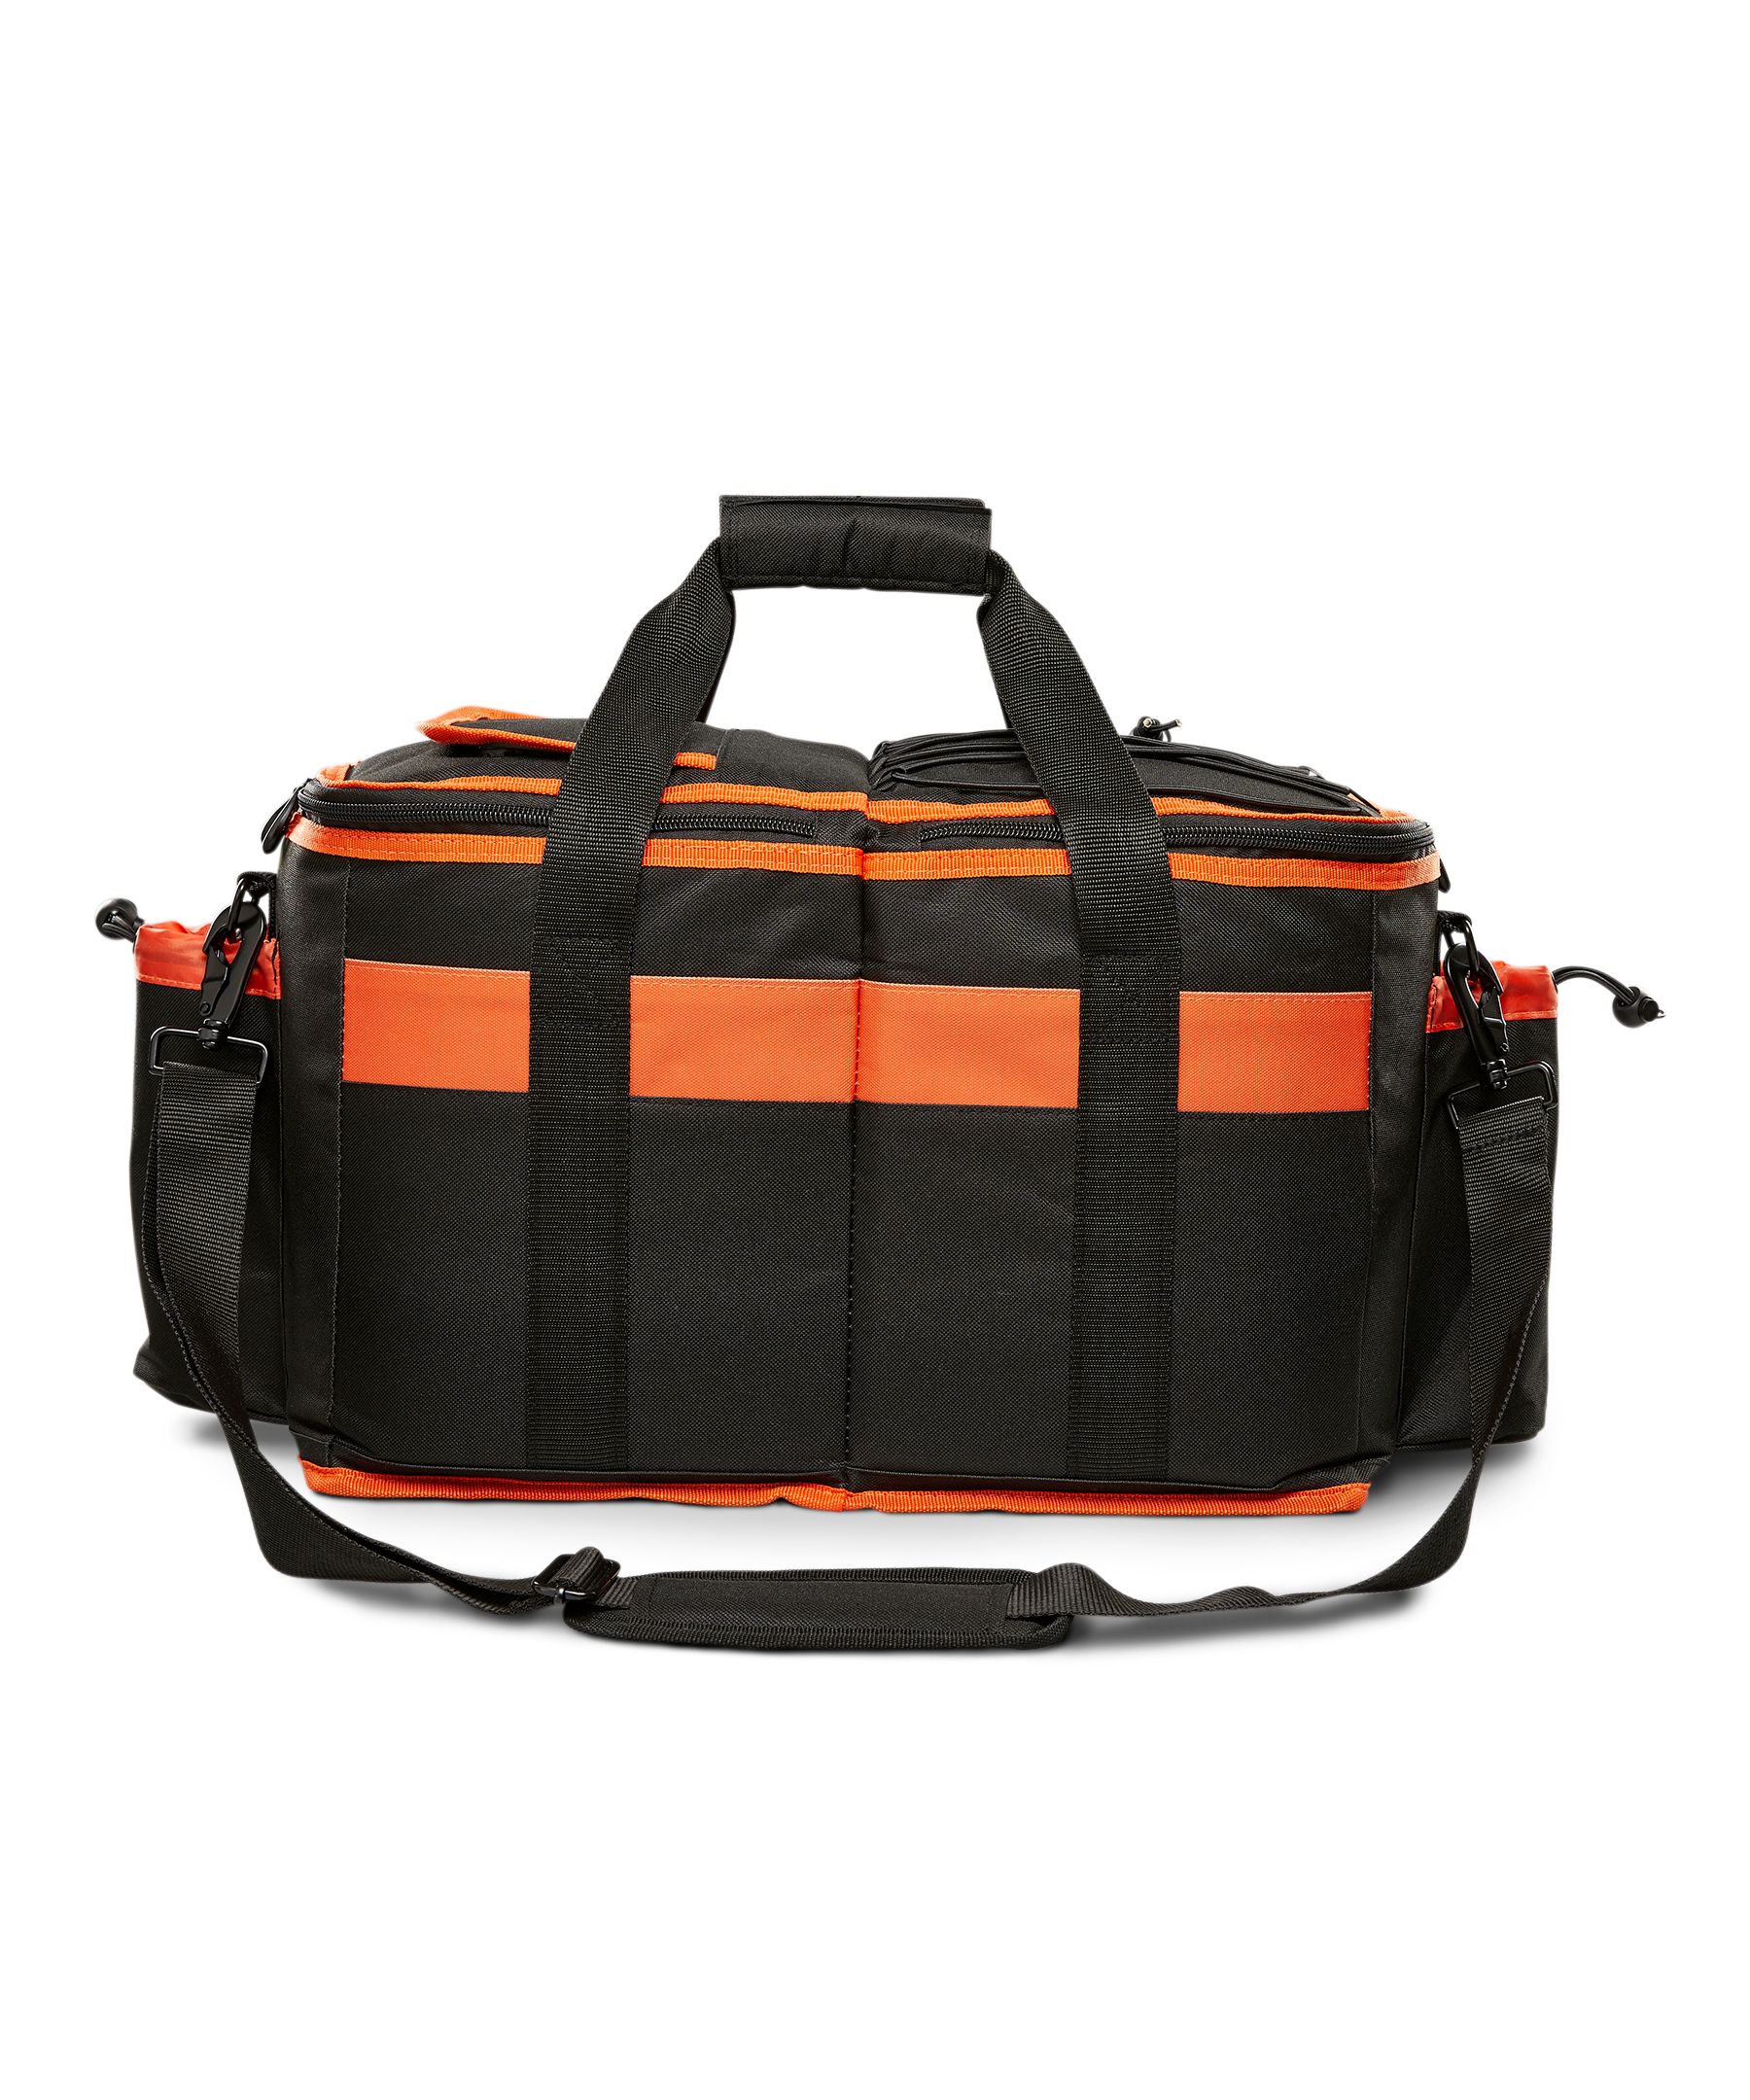 Dakota WorkPro Series 2-Way Zip Lunch Bag with Shoulder Strap